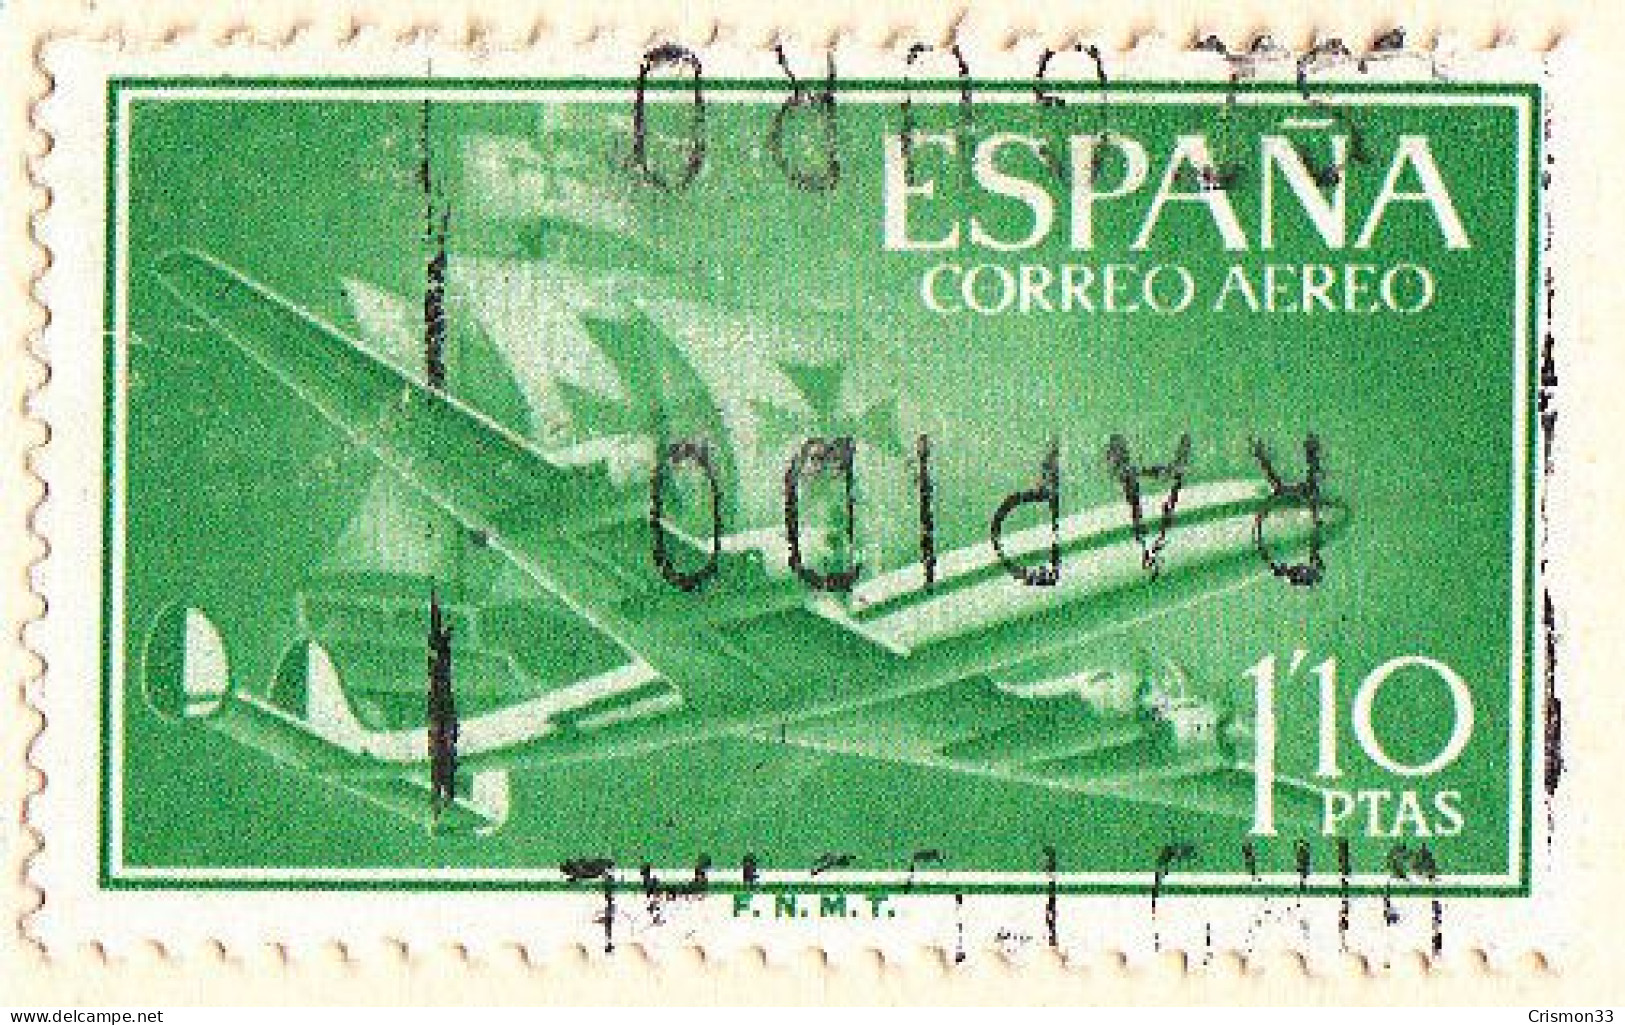 1955 - 1956 - ESPAÑA - SUPERCOSTELLATION Y NAO SANTA MARIA - EDIFIL 1173 - Oblitérés